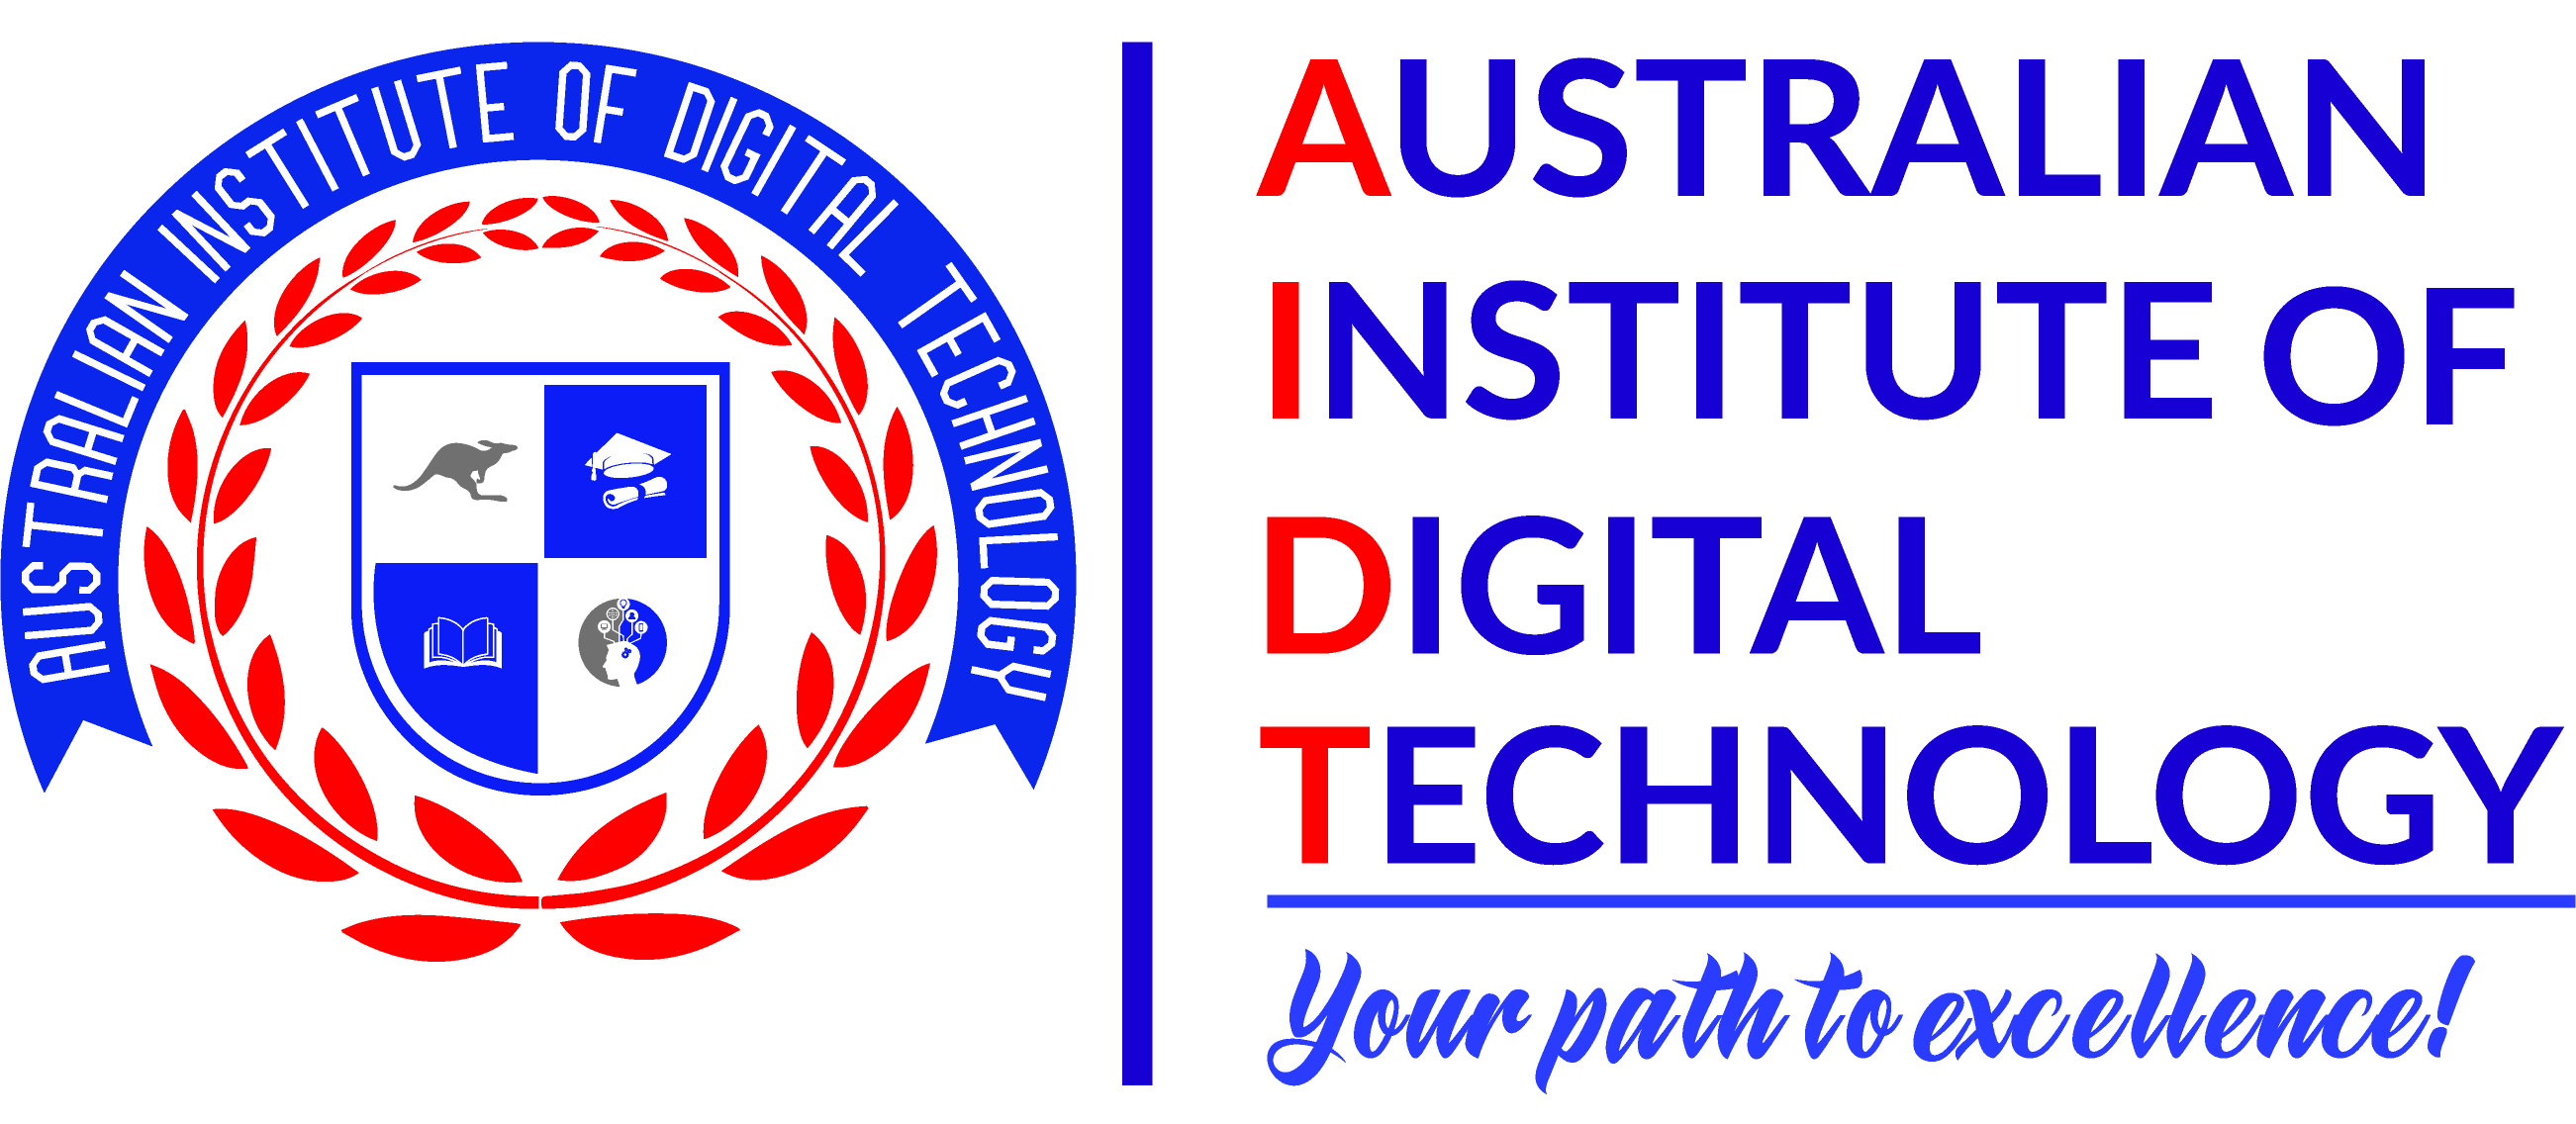 Australian Institute of Digital Technology (AIDT)